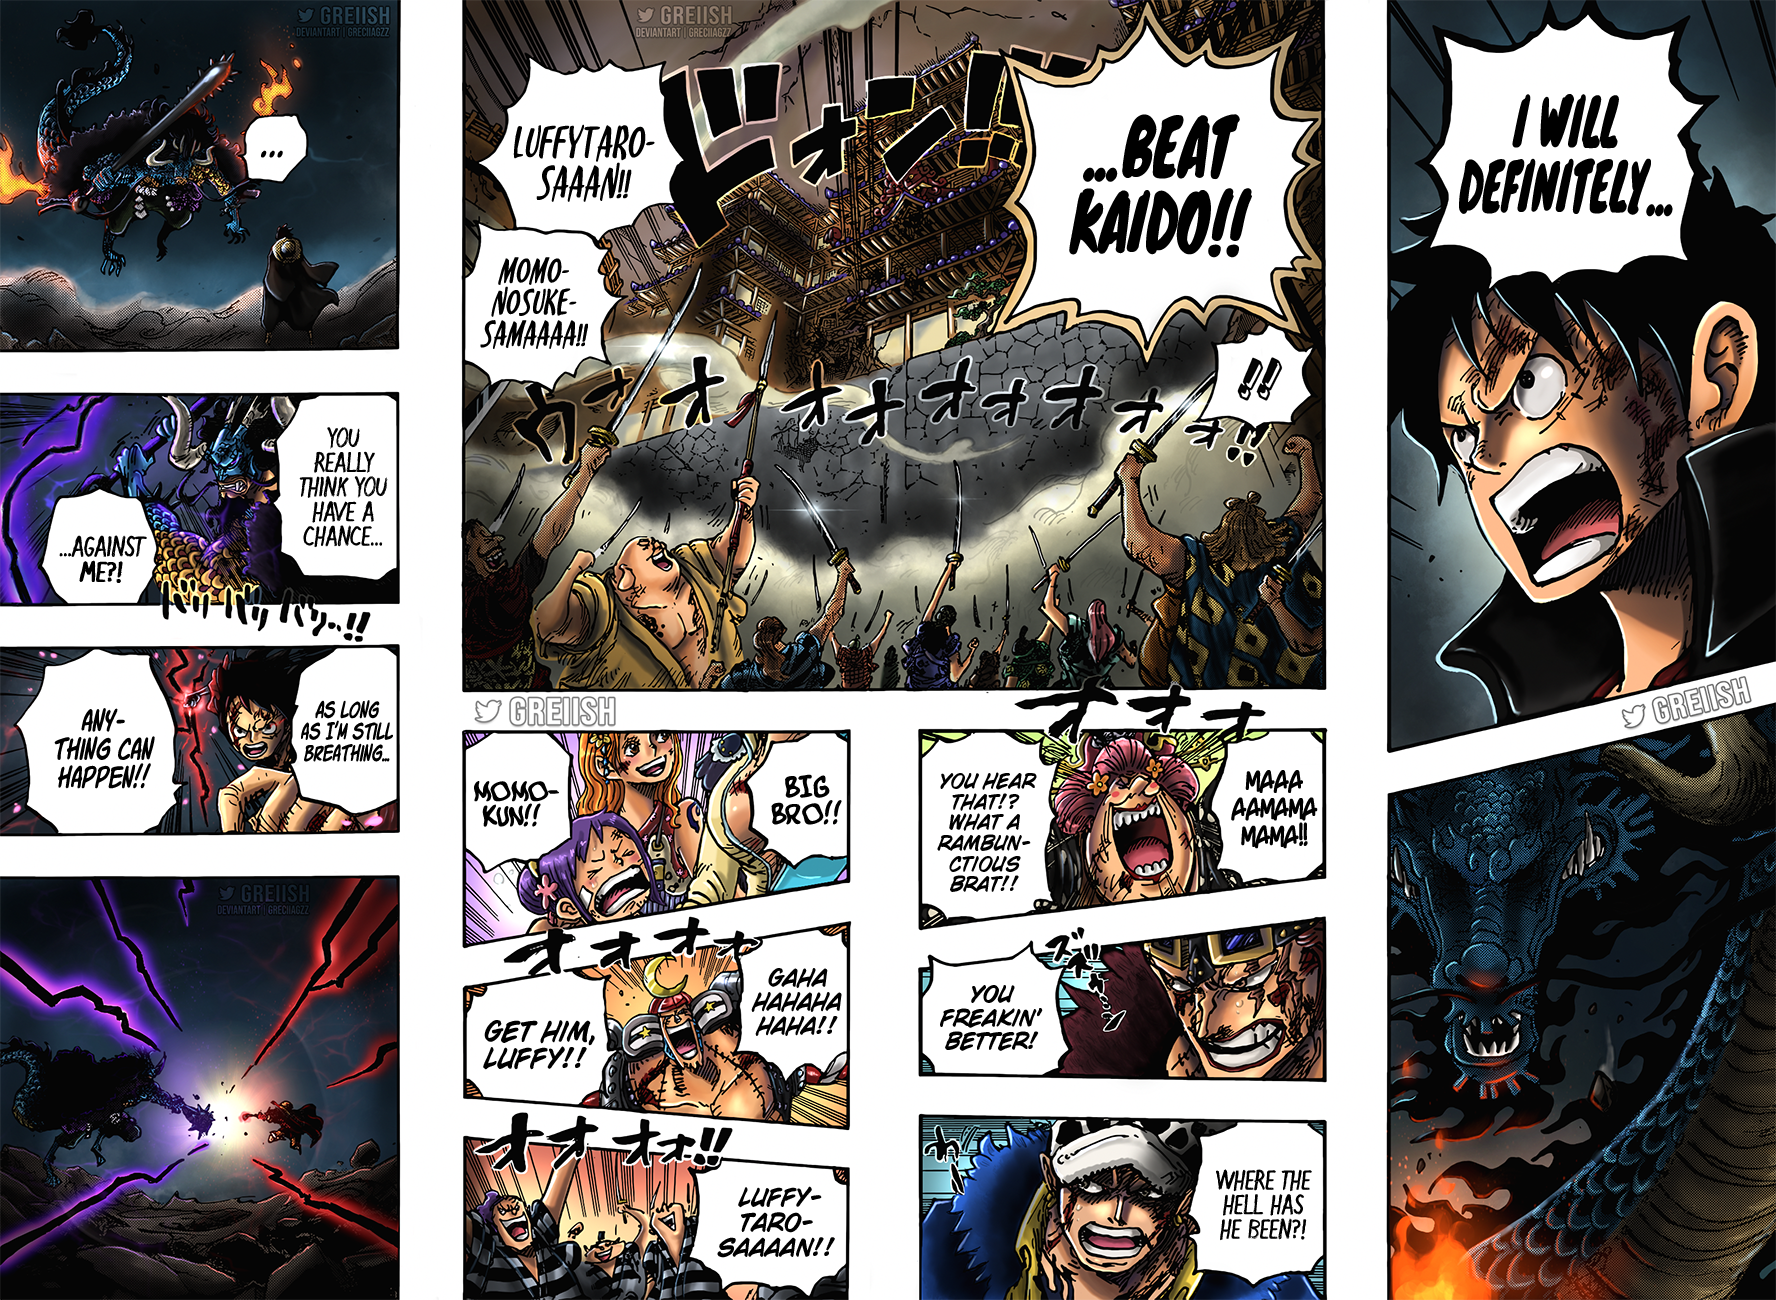 One Piece Chapter 1026 to portray battle of Kaidou vs. Yamato